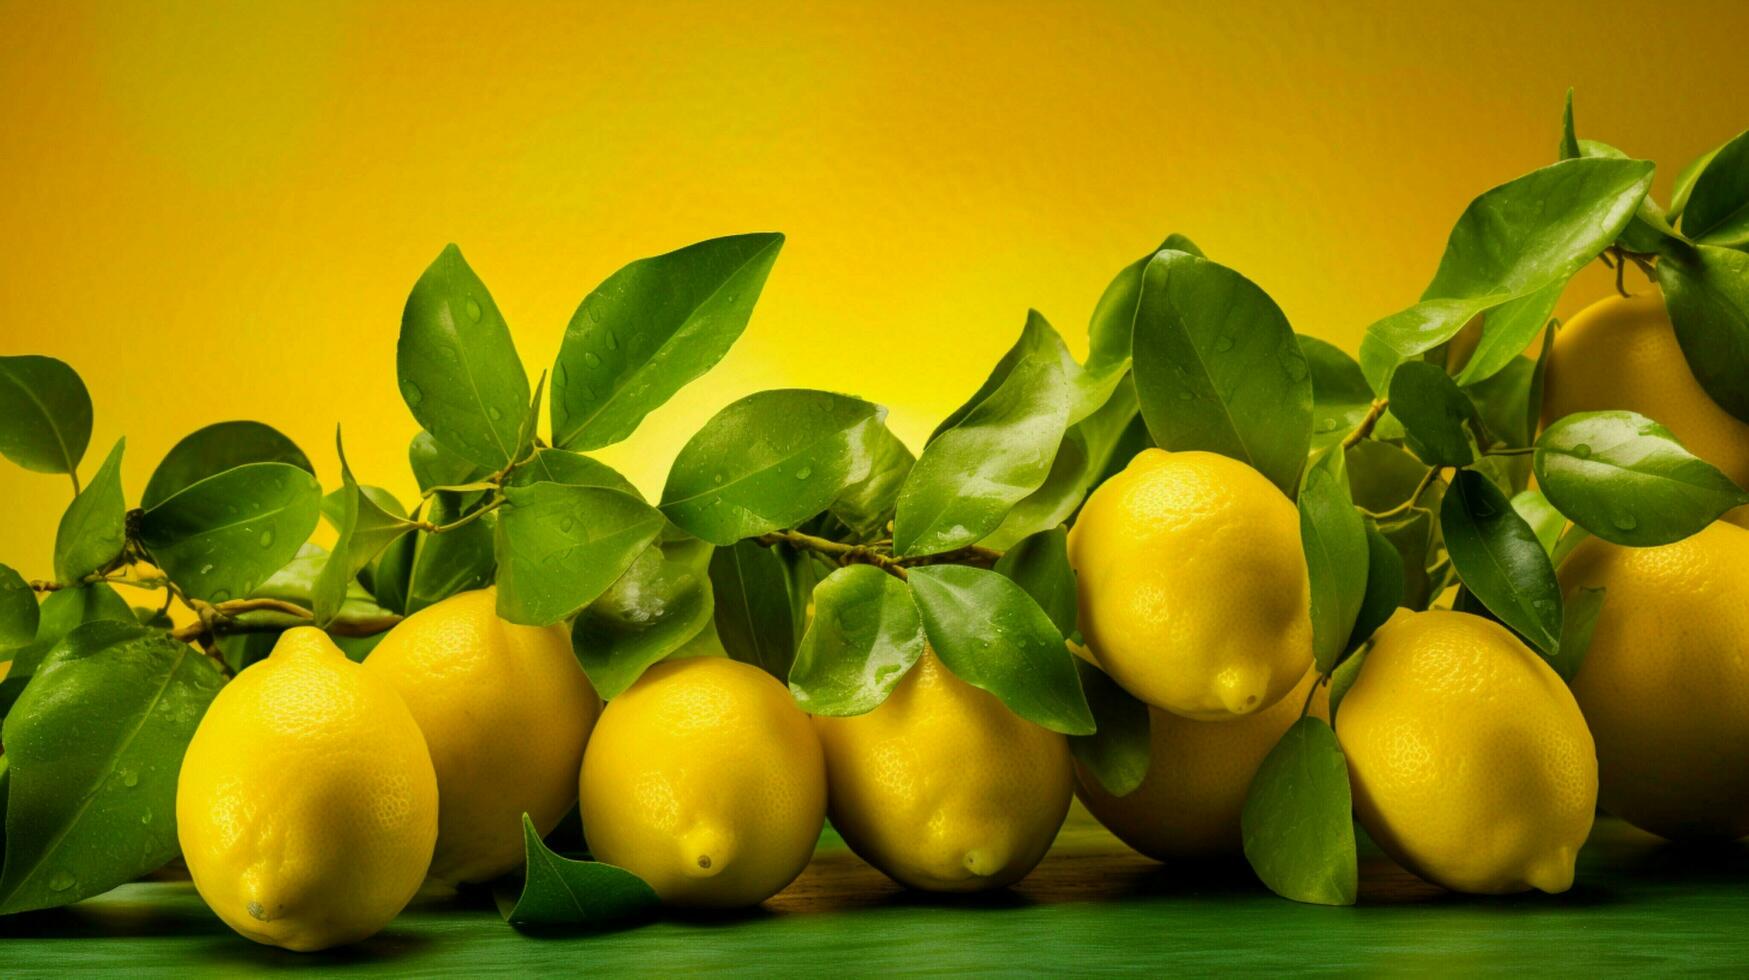 AI generated Lemon yellow background photo